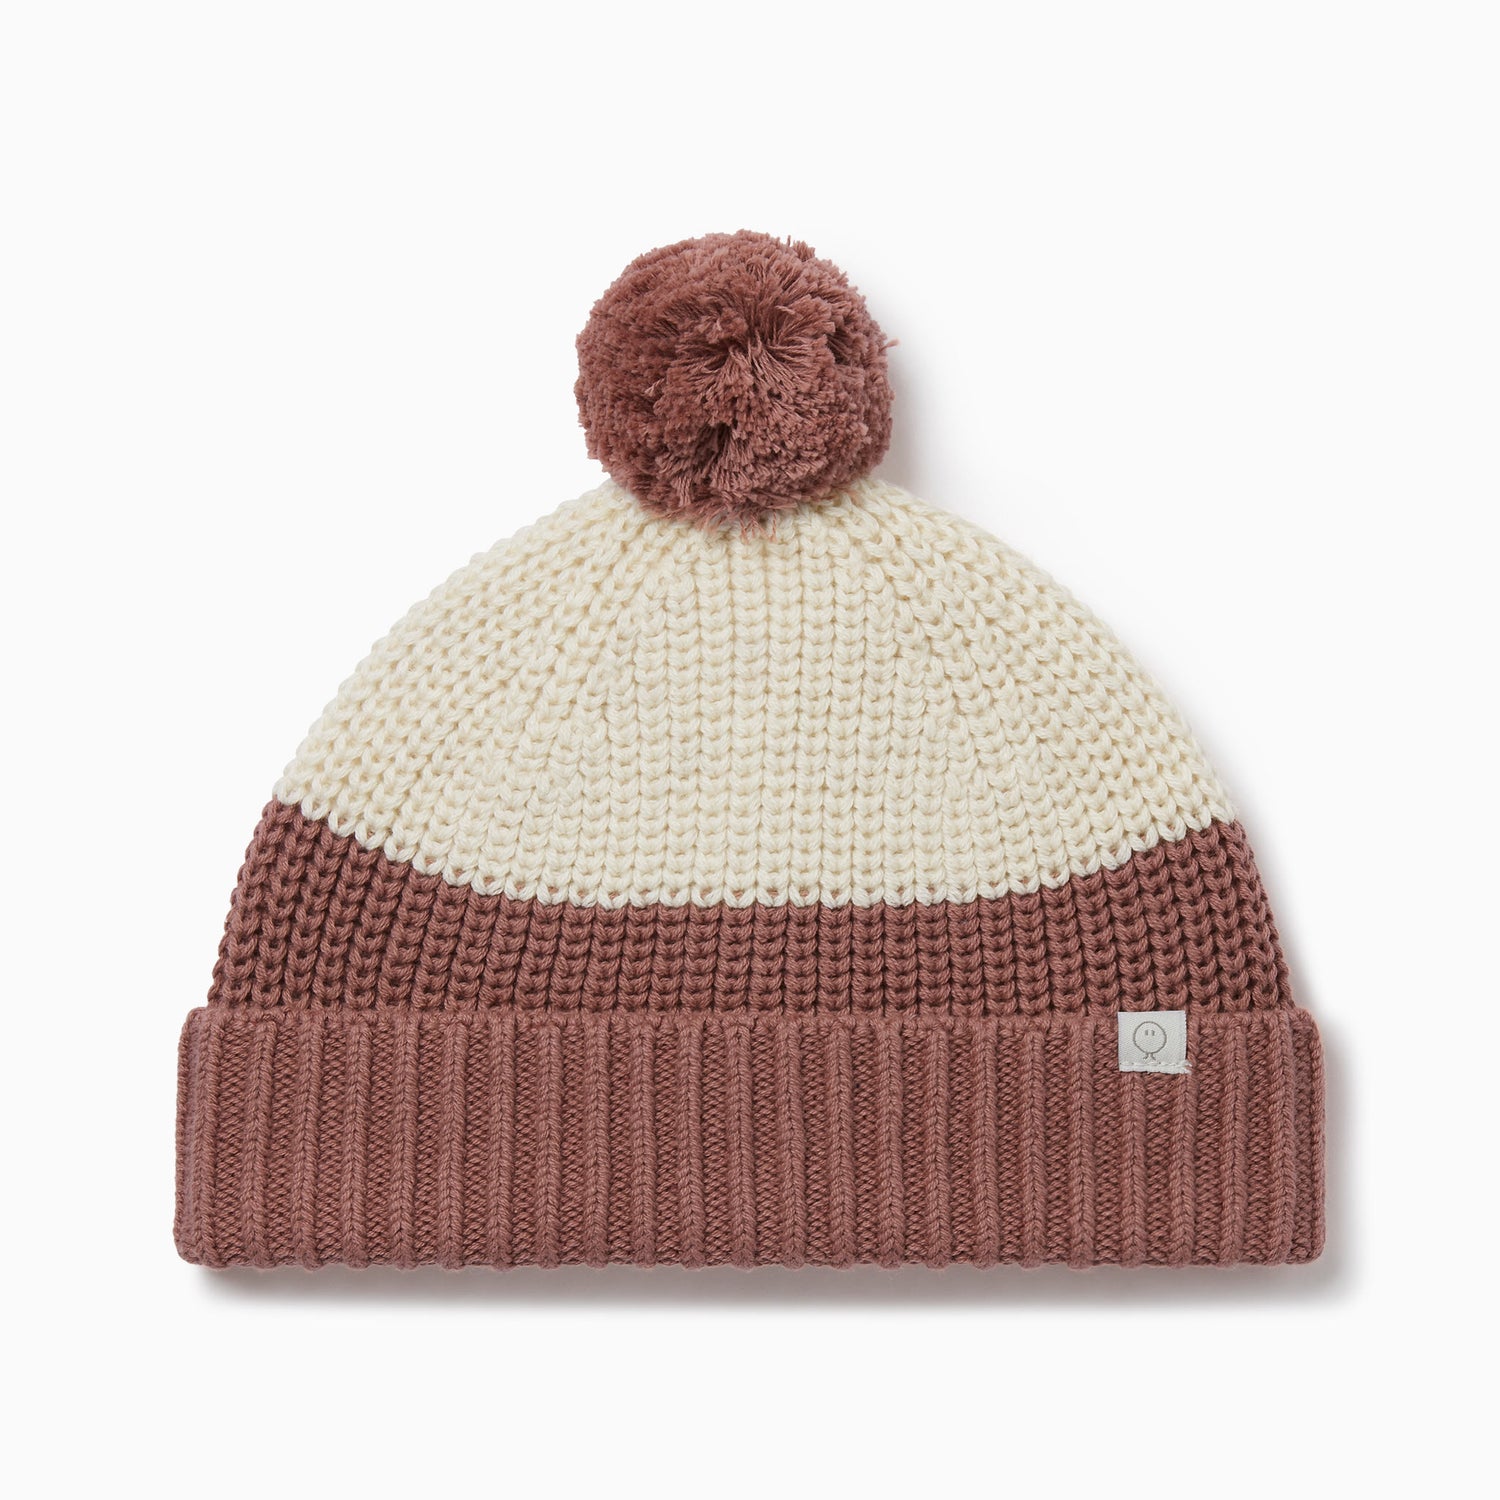 Chunky knit colourblock beanie hat